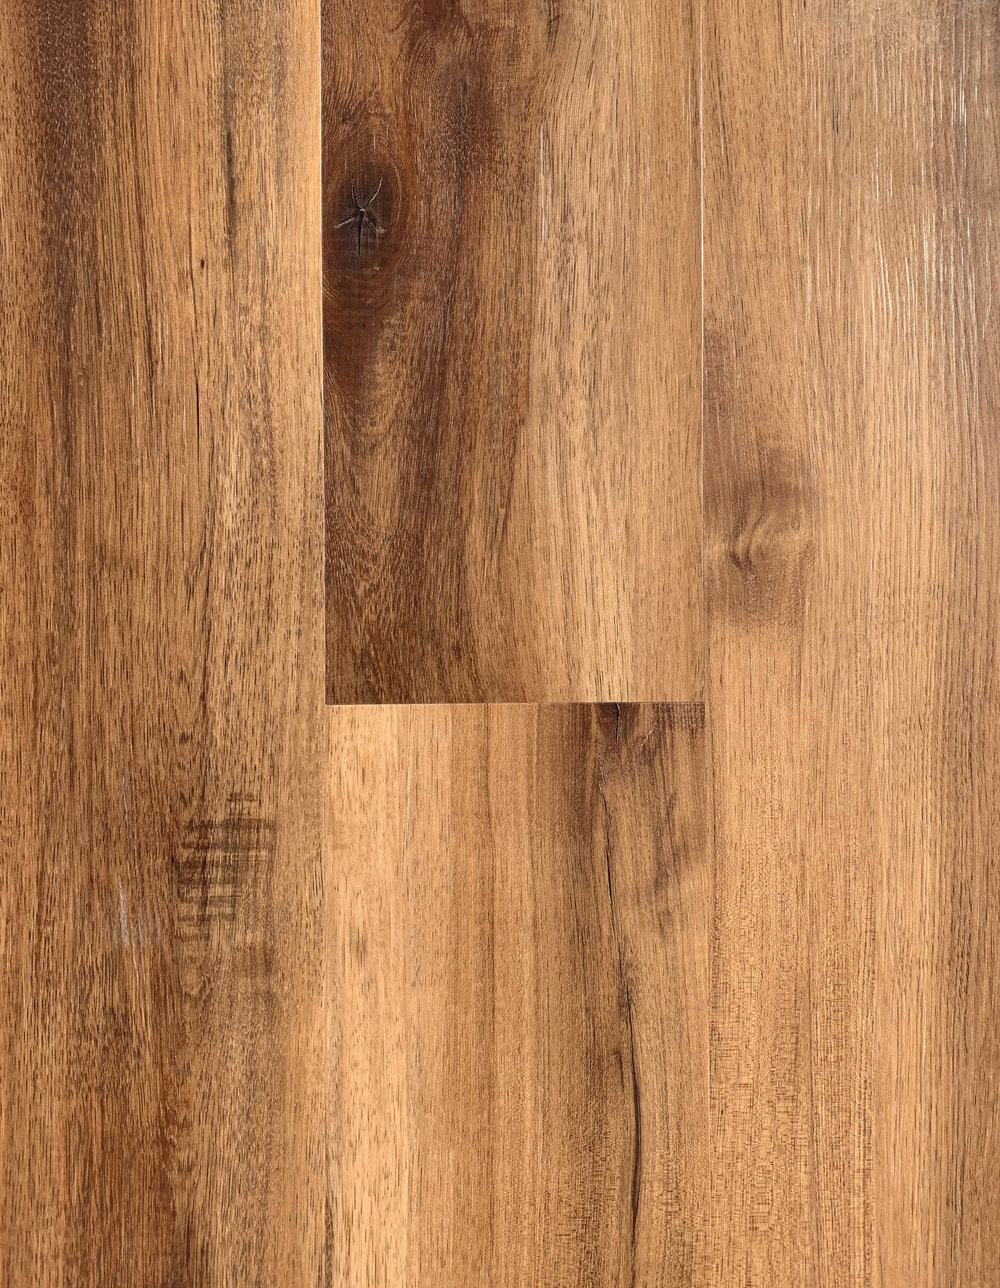 Honey Pecan Boardwalk Hardwood Floors, Nuvelle Hardwood Flooring